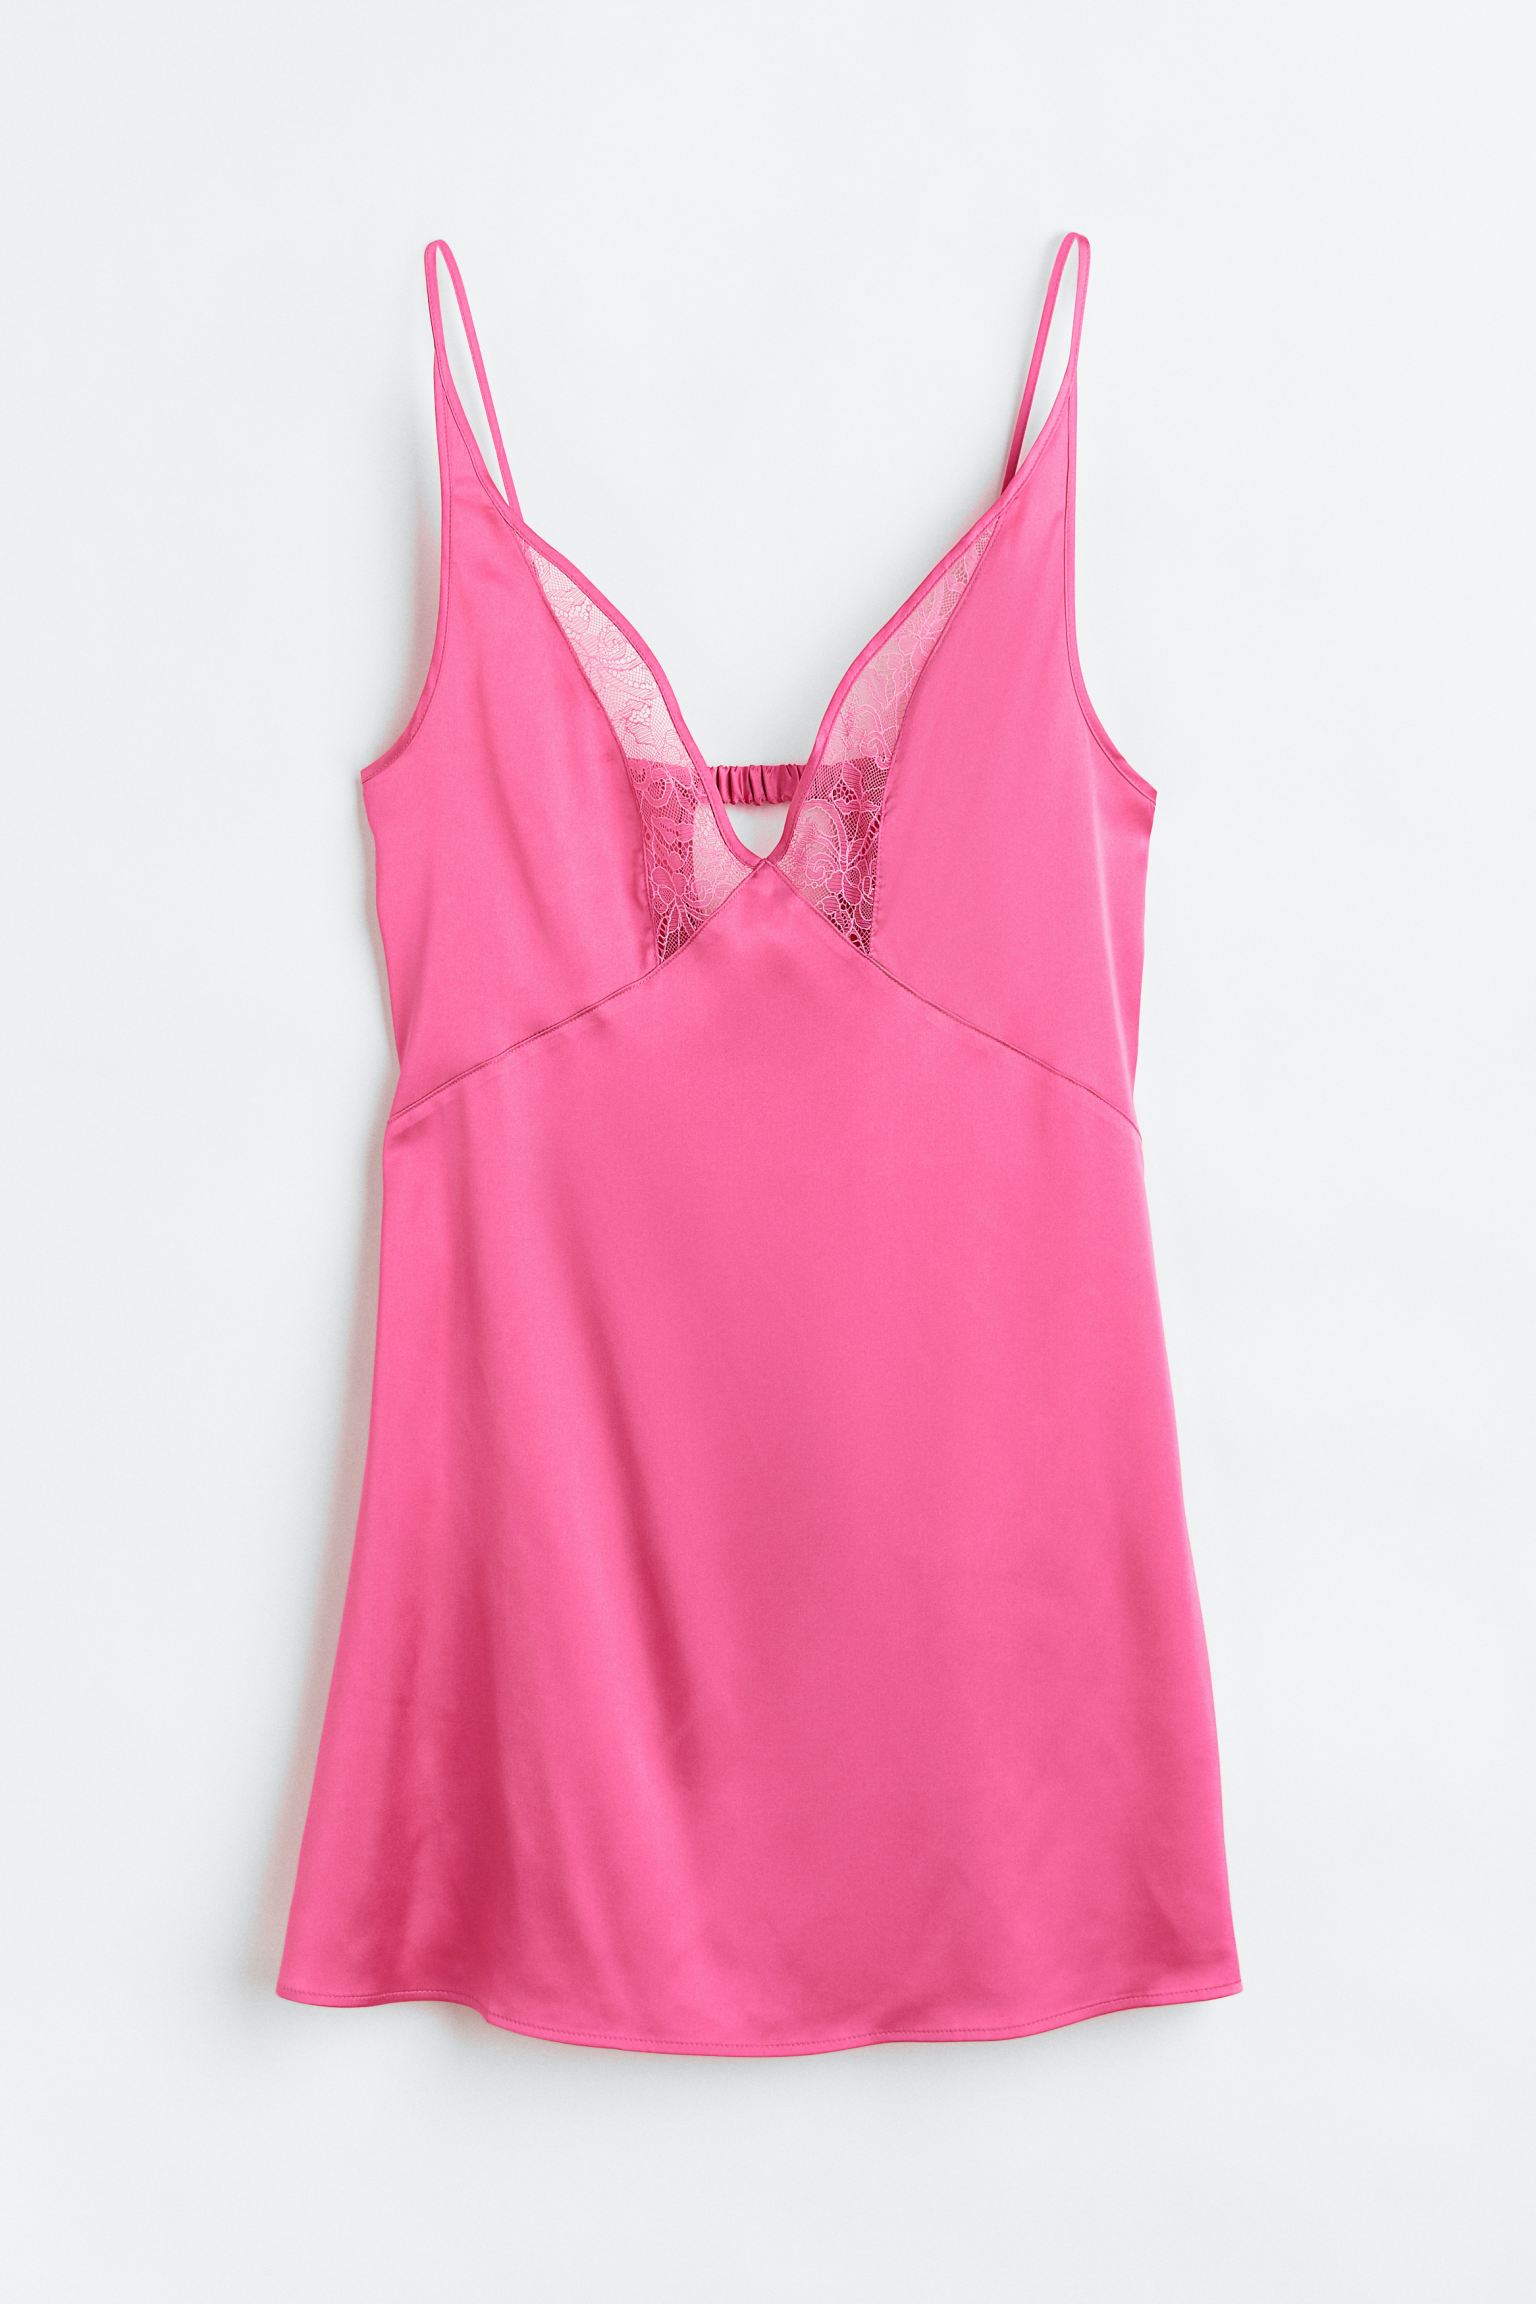 Ночная сорочка женская H&M 1139521004 розовая M (доставка из-за рубежа)